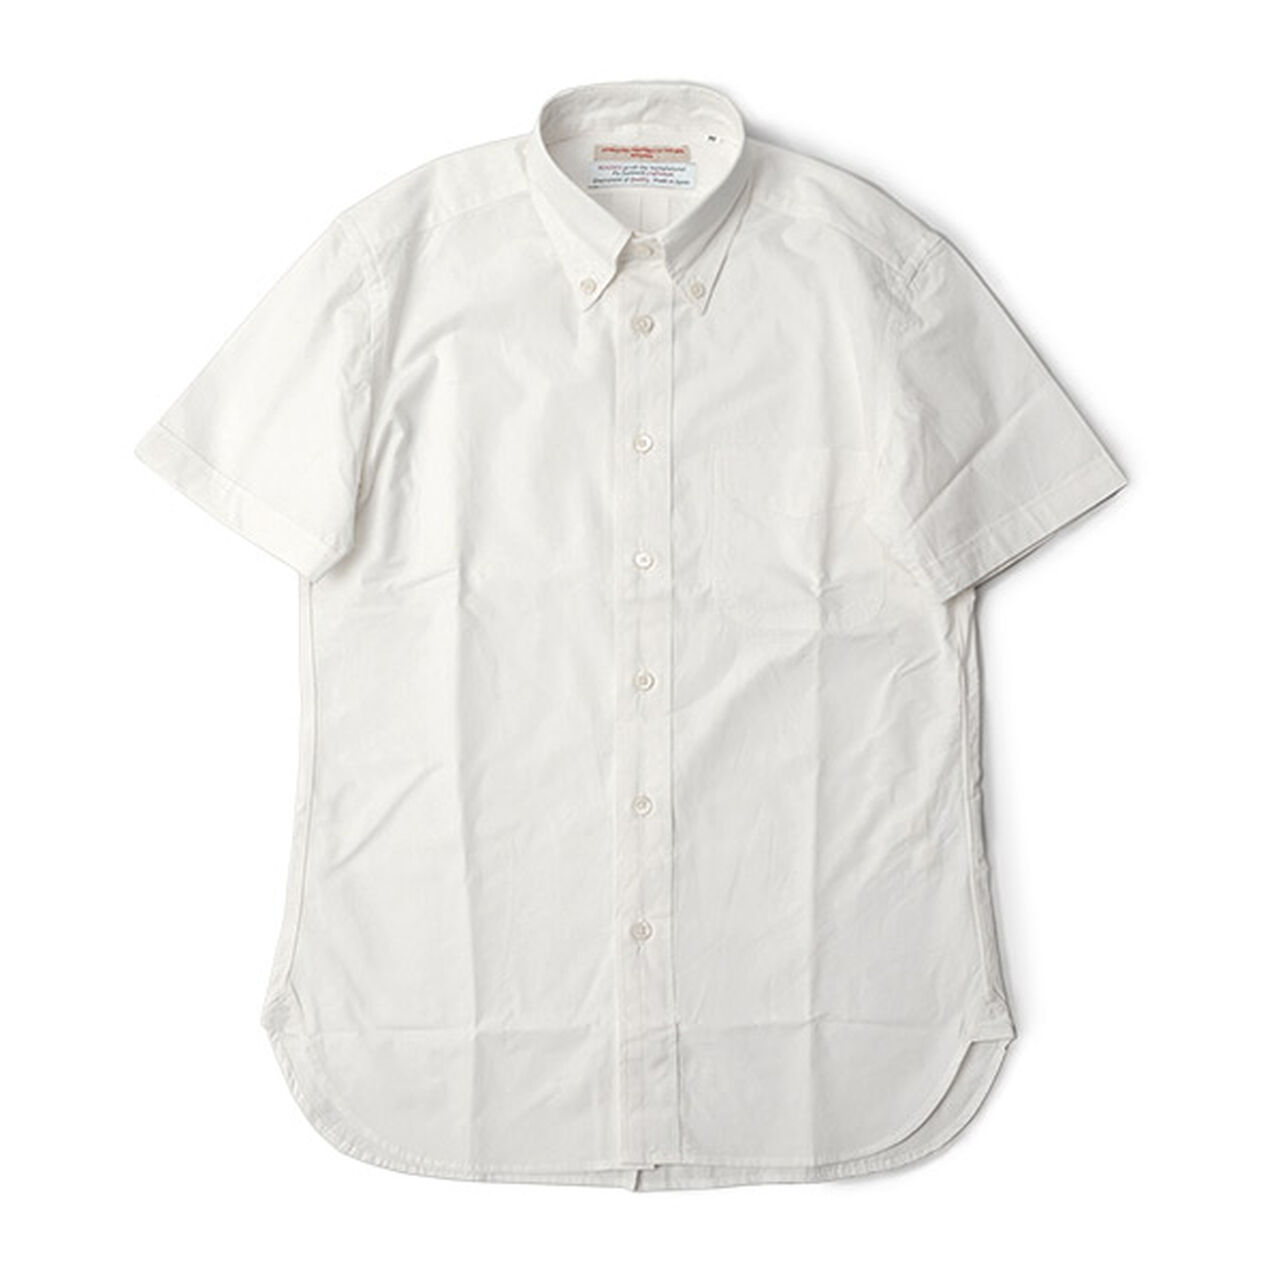 Linen Cotton Dump Short Sleeved Button Down Shirt,White, large image number 0